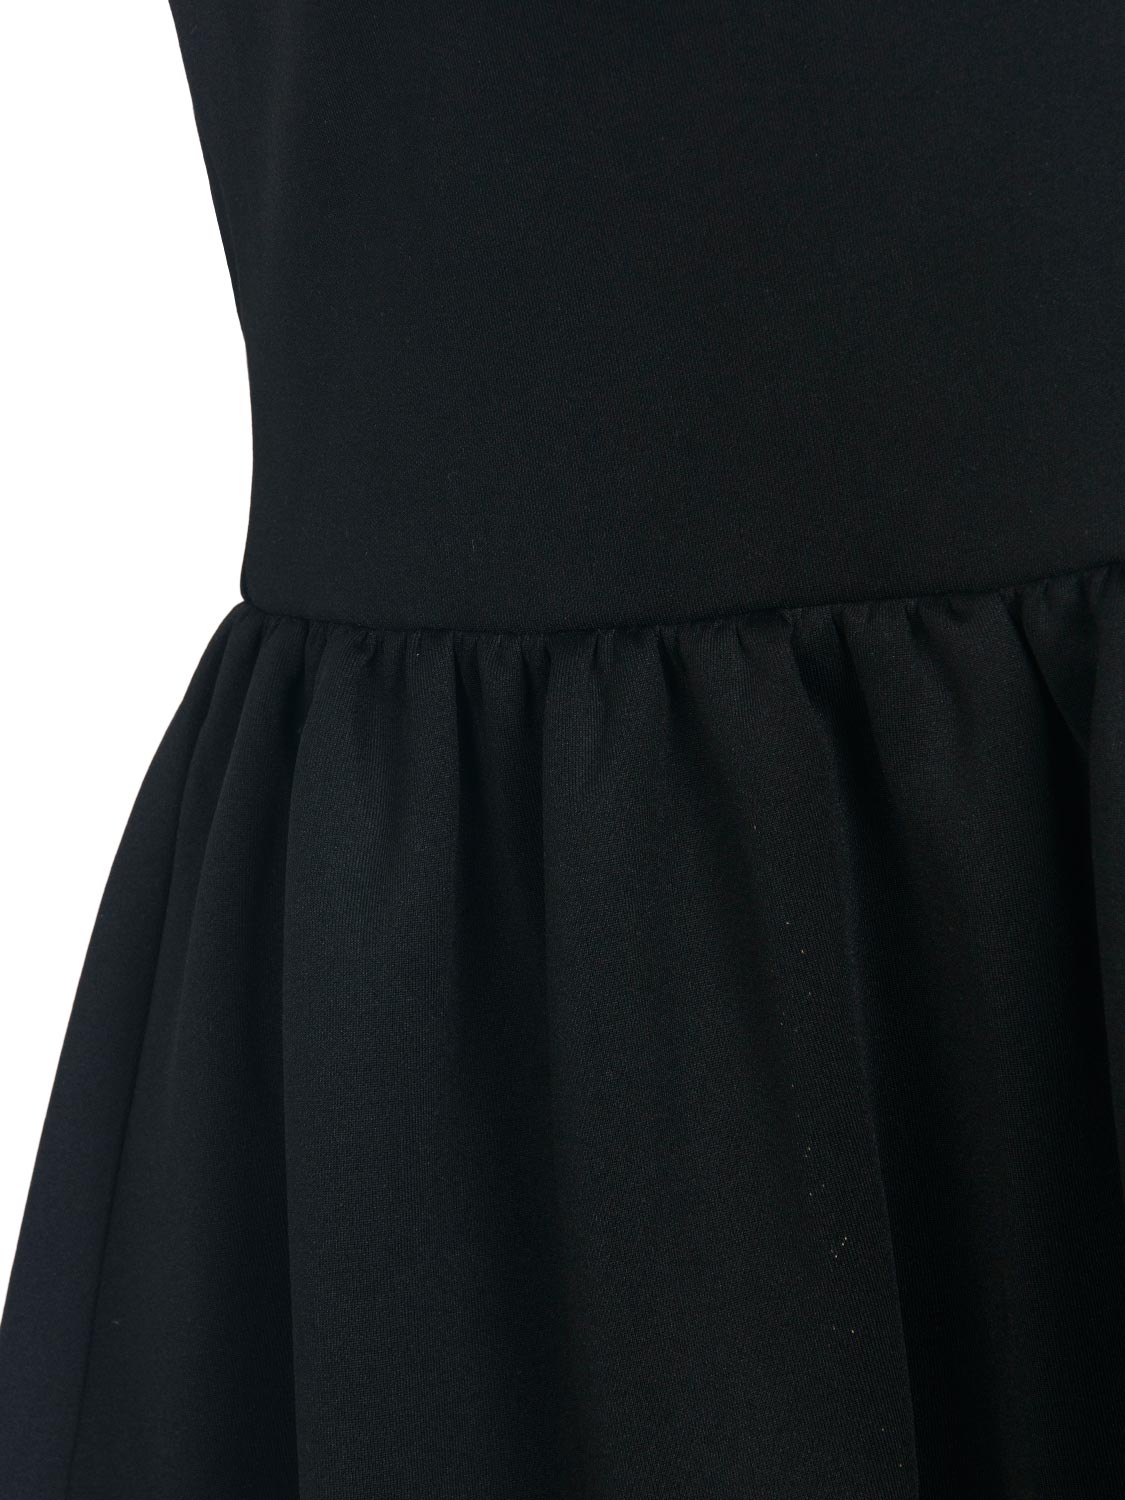 Black V-neck Caged Back Sleeveless A-line Dress | Choies